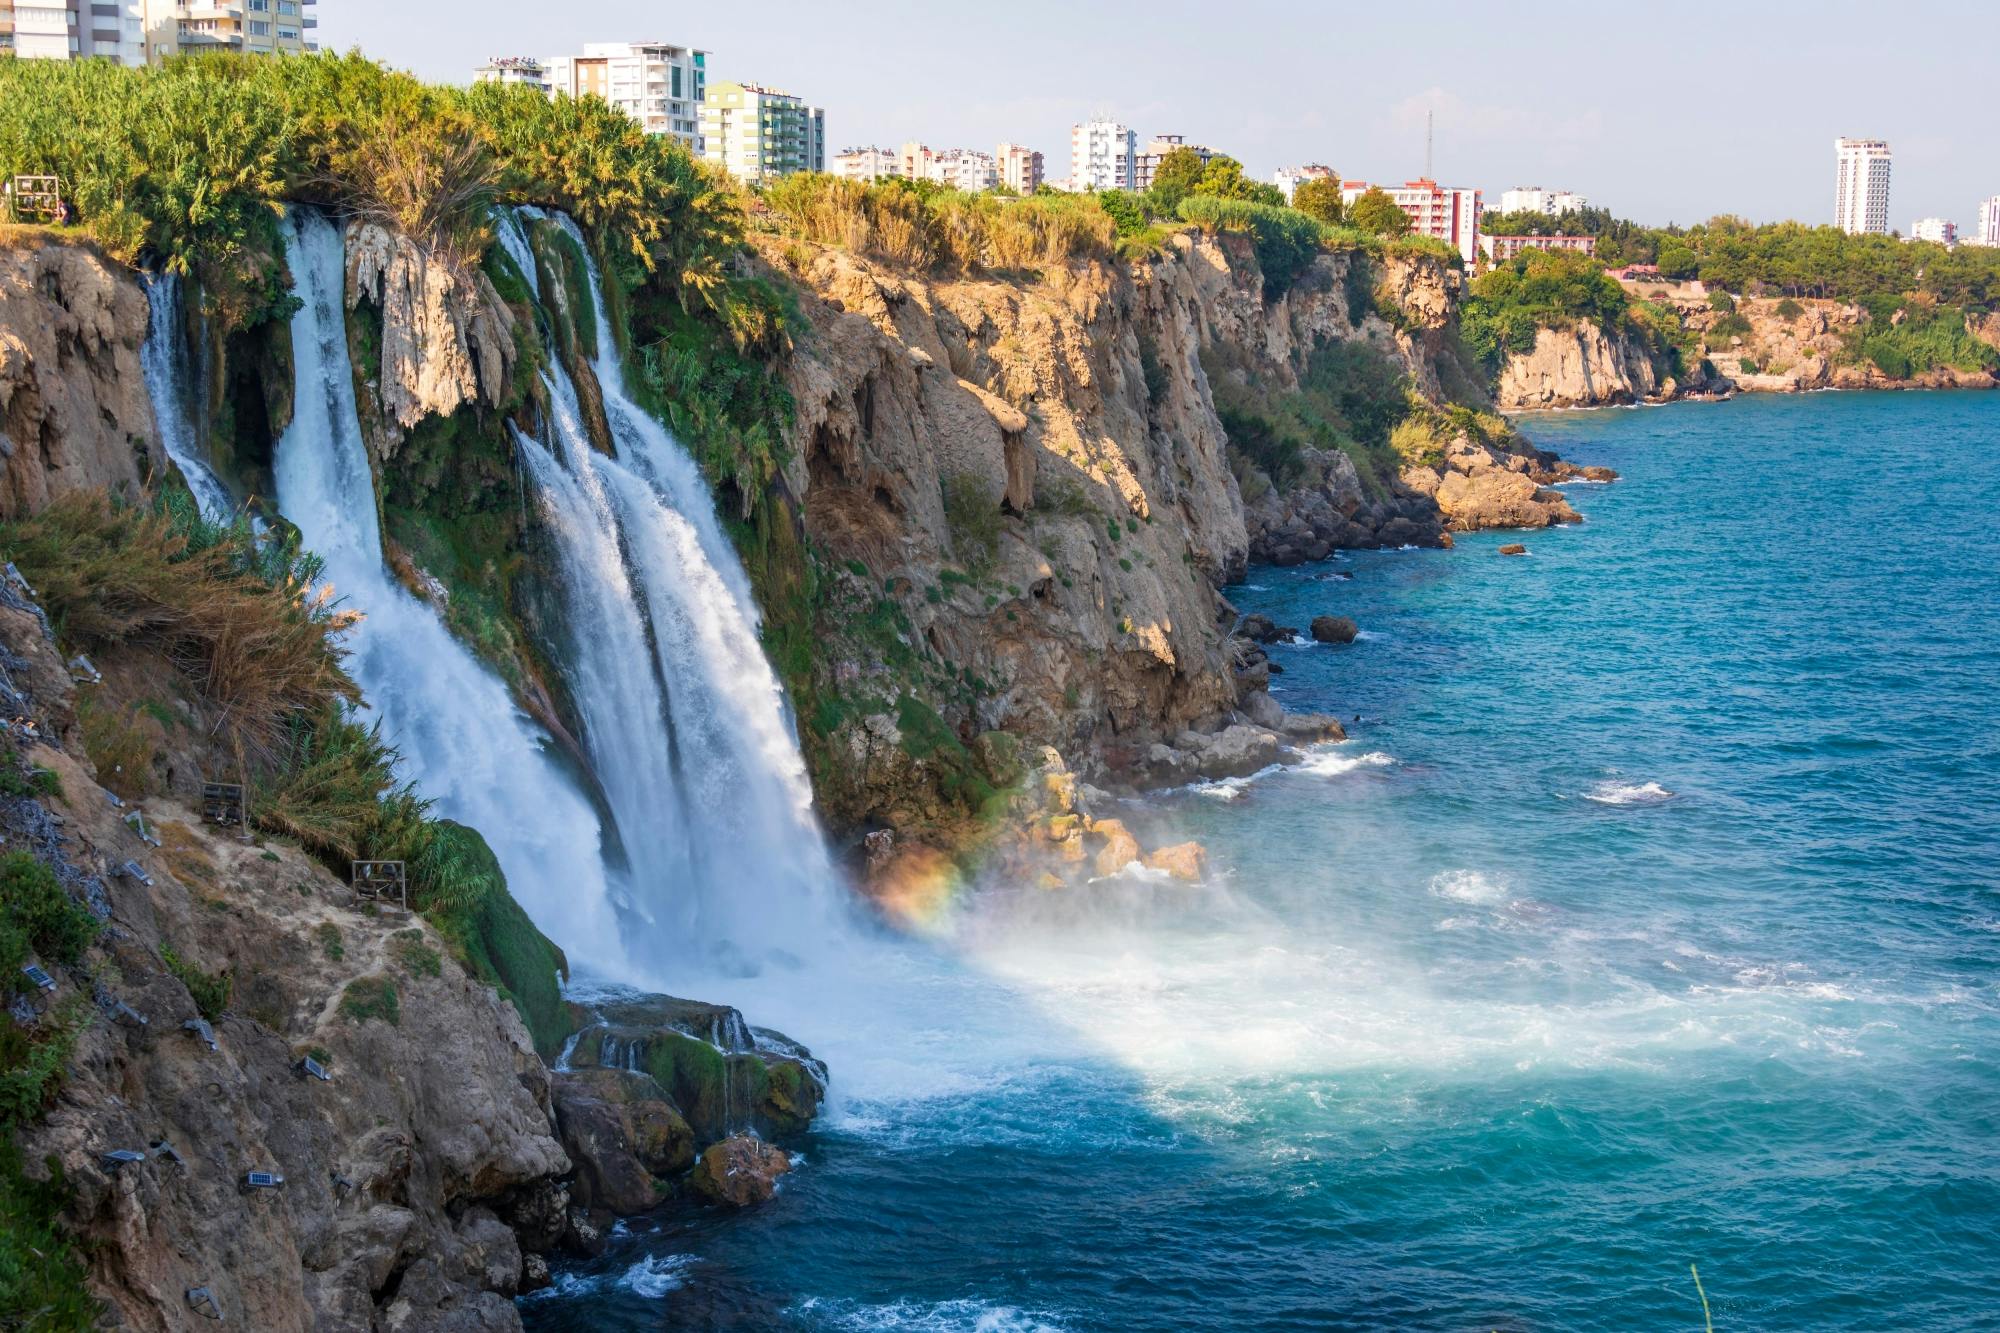 Antalya Old Town Tour with Karpuzkaldiran Waterfall